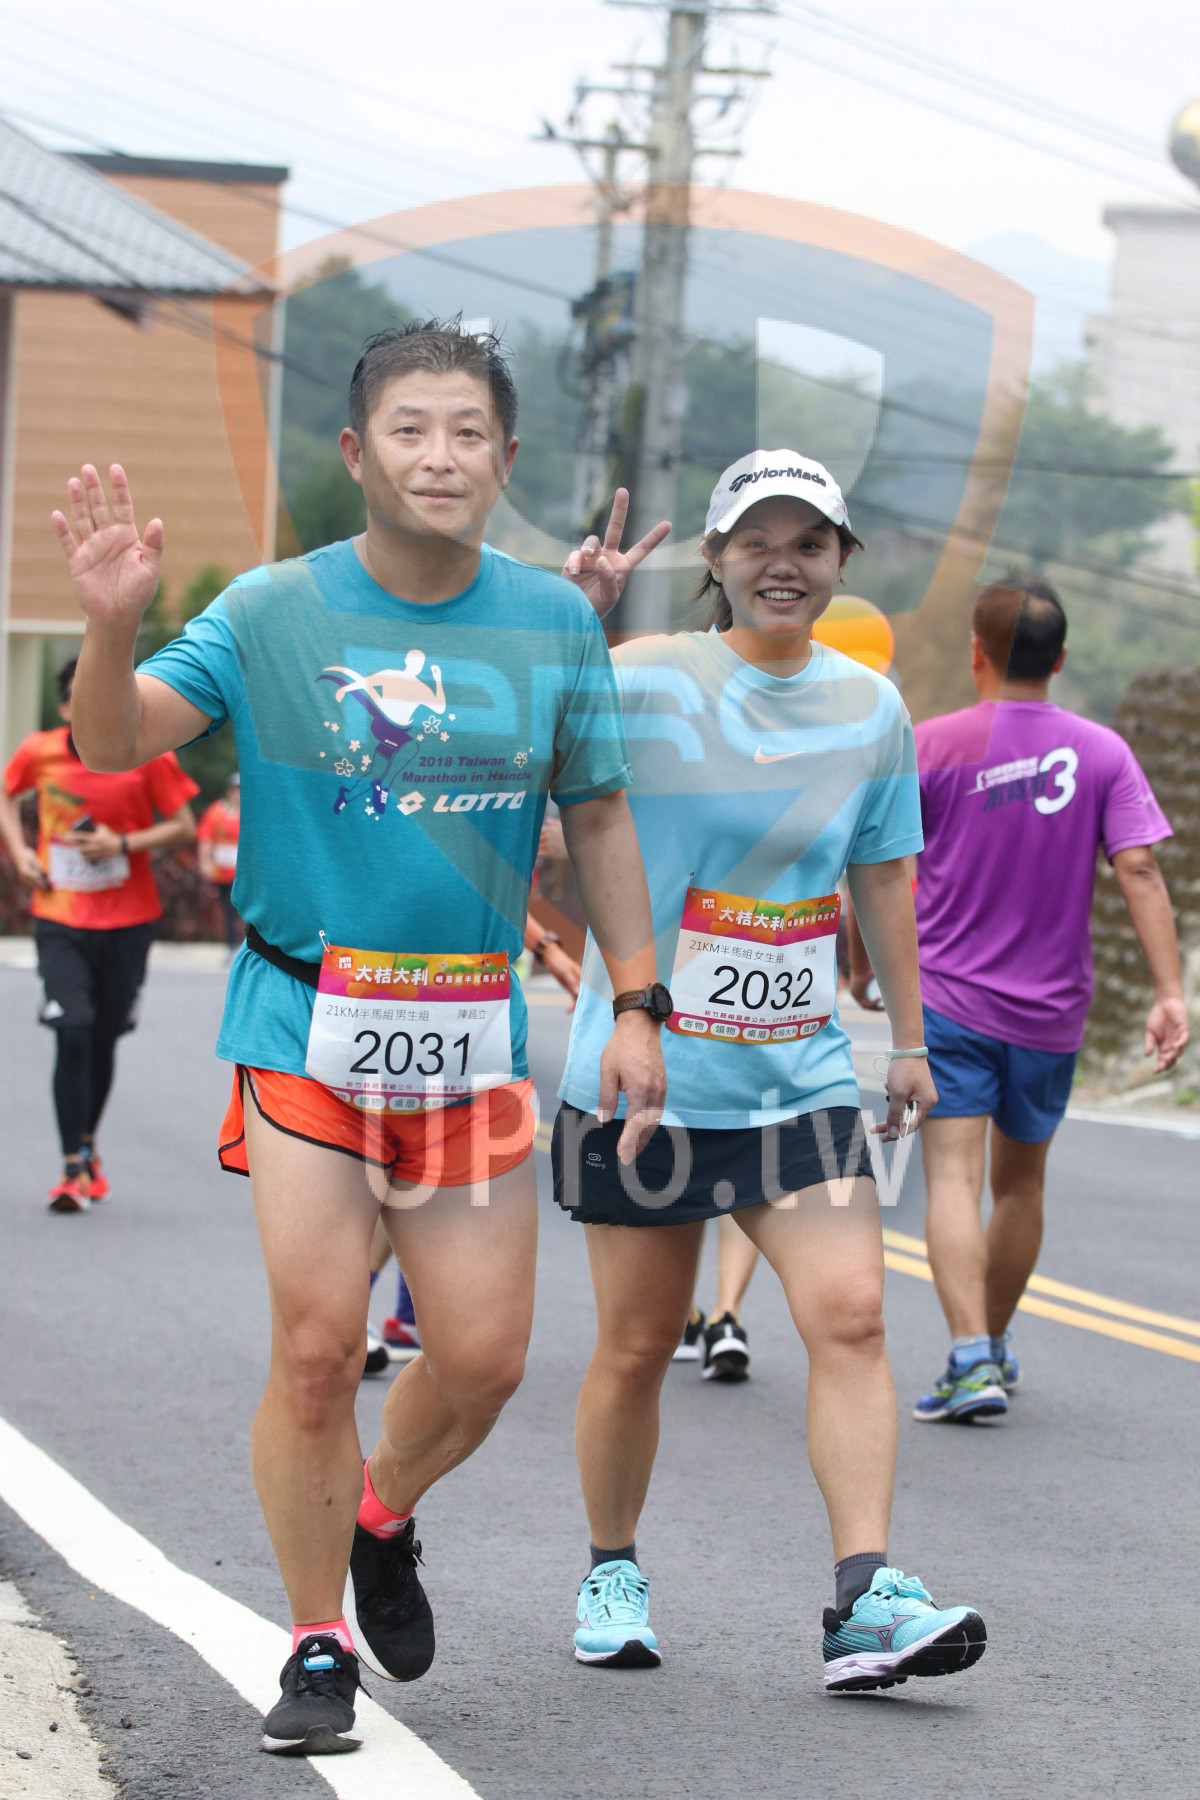 3,2018 Taiwan,Marathon in,㩳,2032,21KM,,8817,2031|